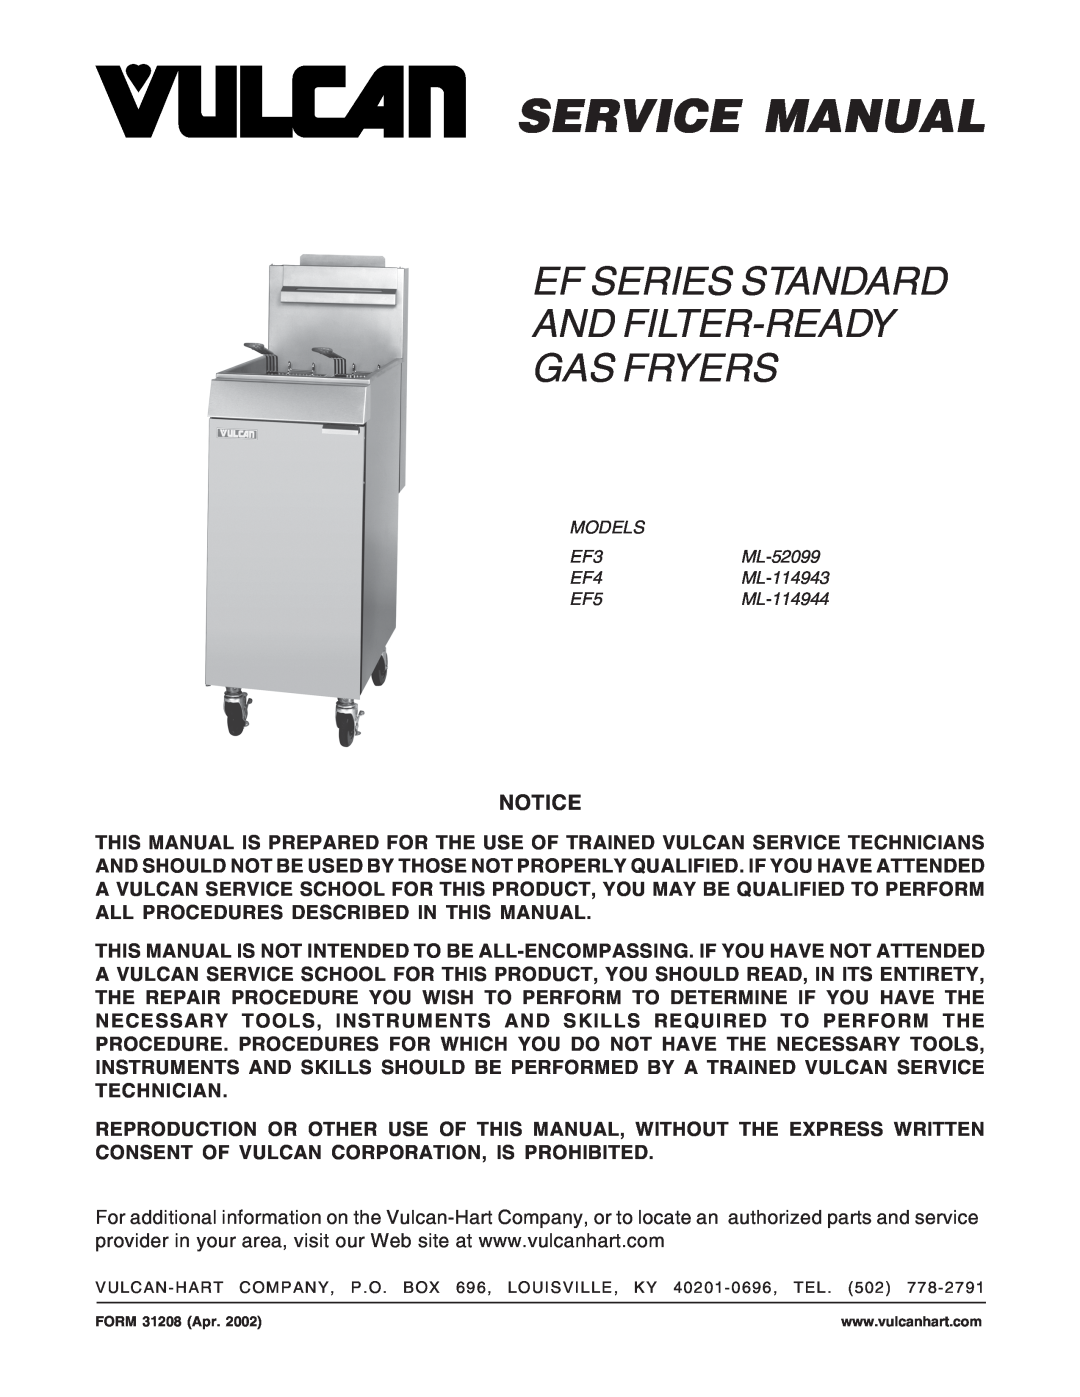 Vulcan-Hart EF4 ML-114943 operation manual Installation Operation Manual, MODELS EF3, EF4, & EF5 ECONOFRY GAS FRYERS, Form 